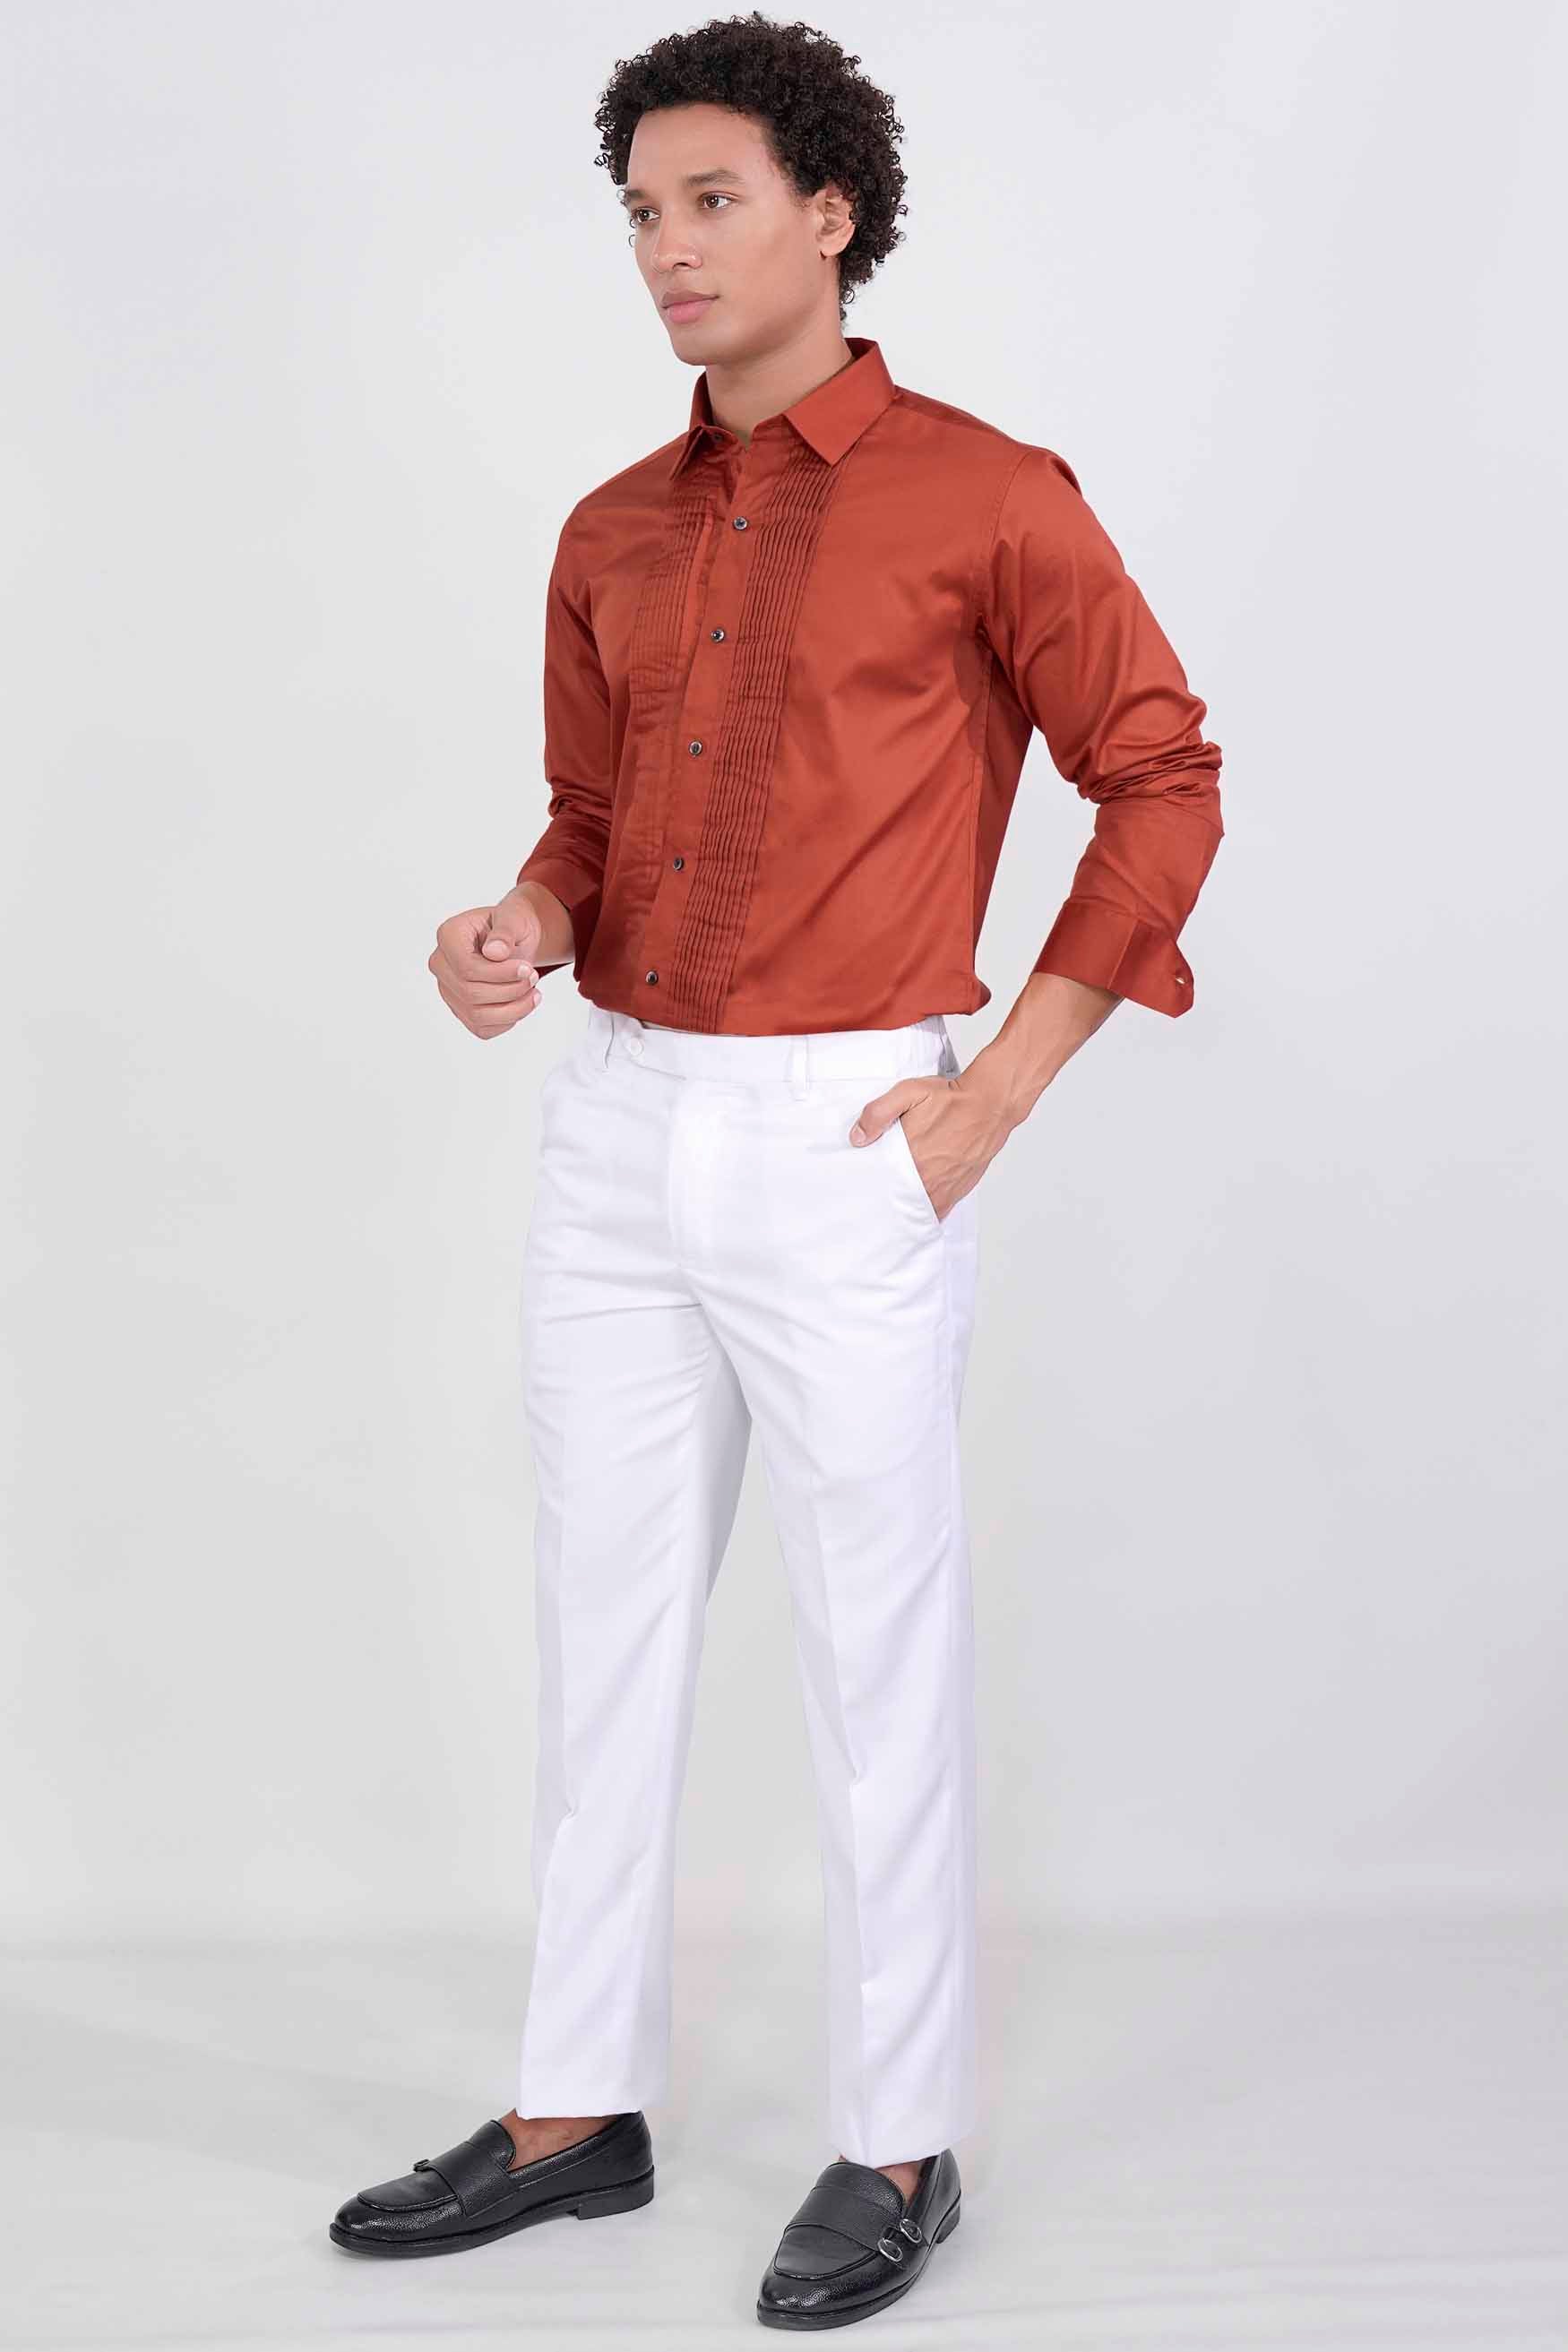 Deep Chestnut Orange Subtle Sheen Super Soft Premium Cotton Tuxedo Shirt